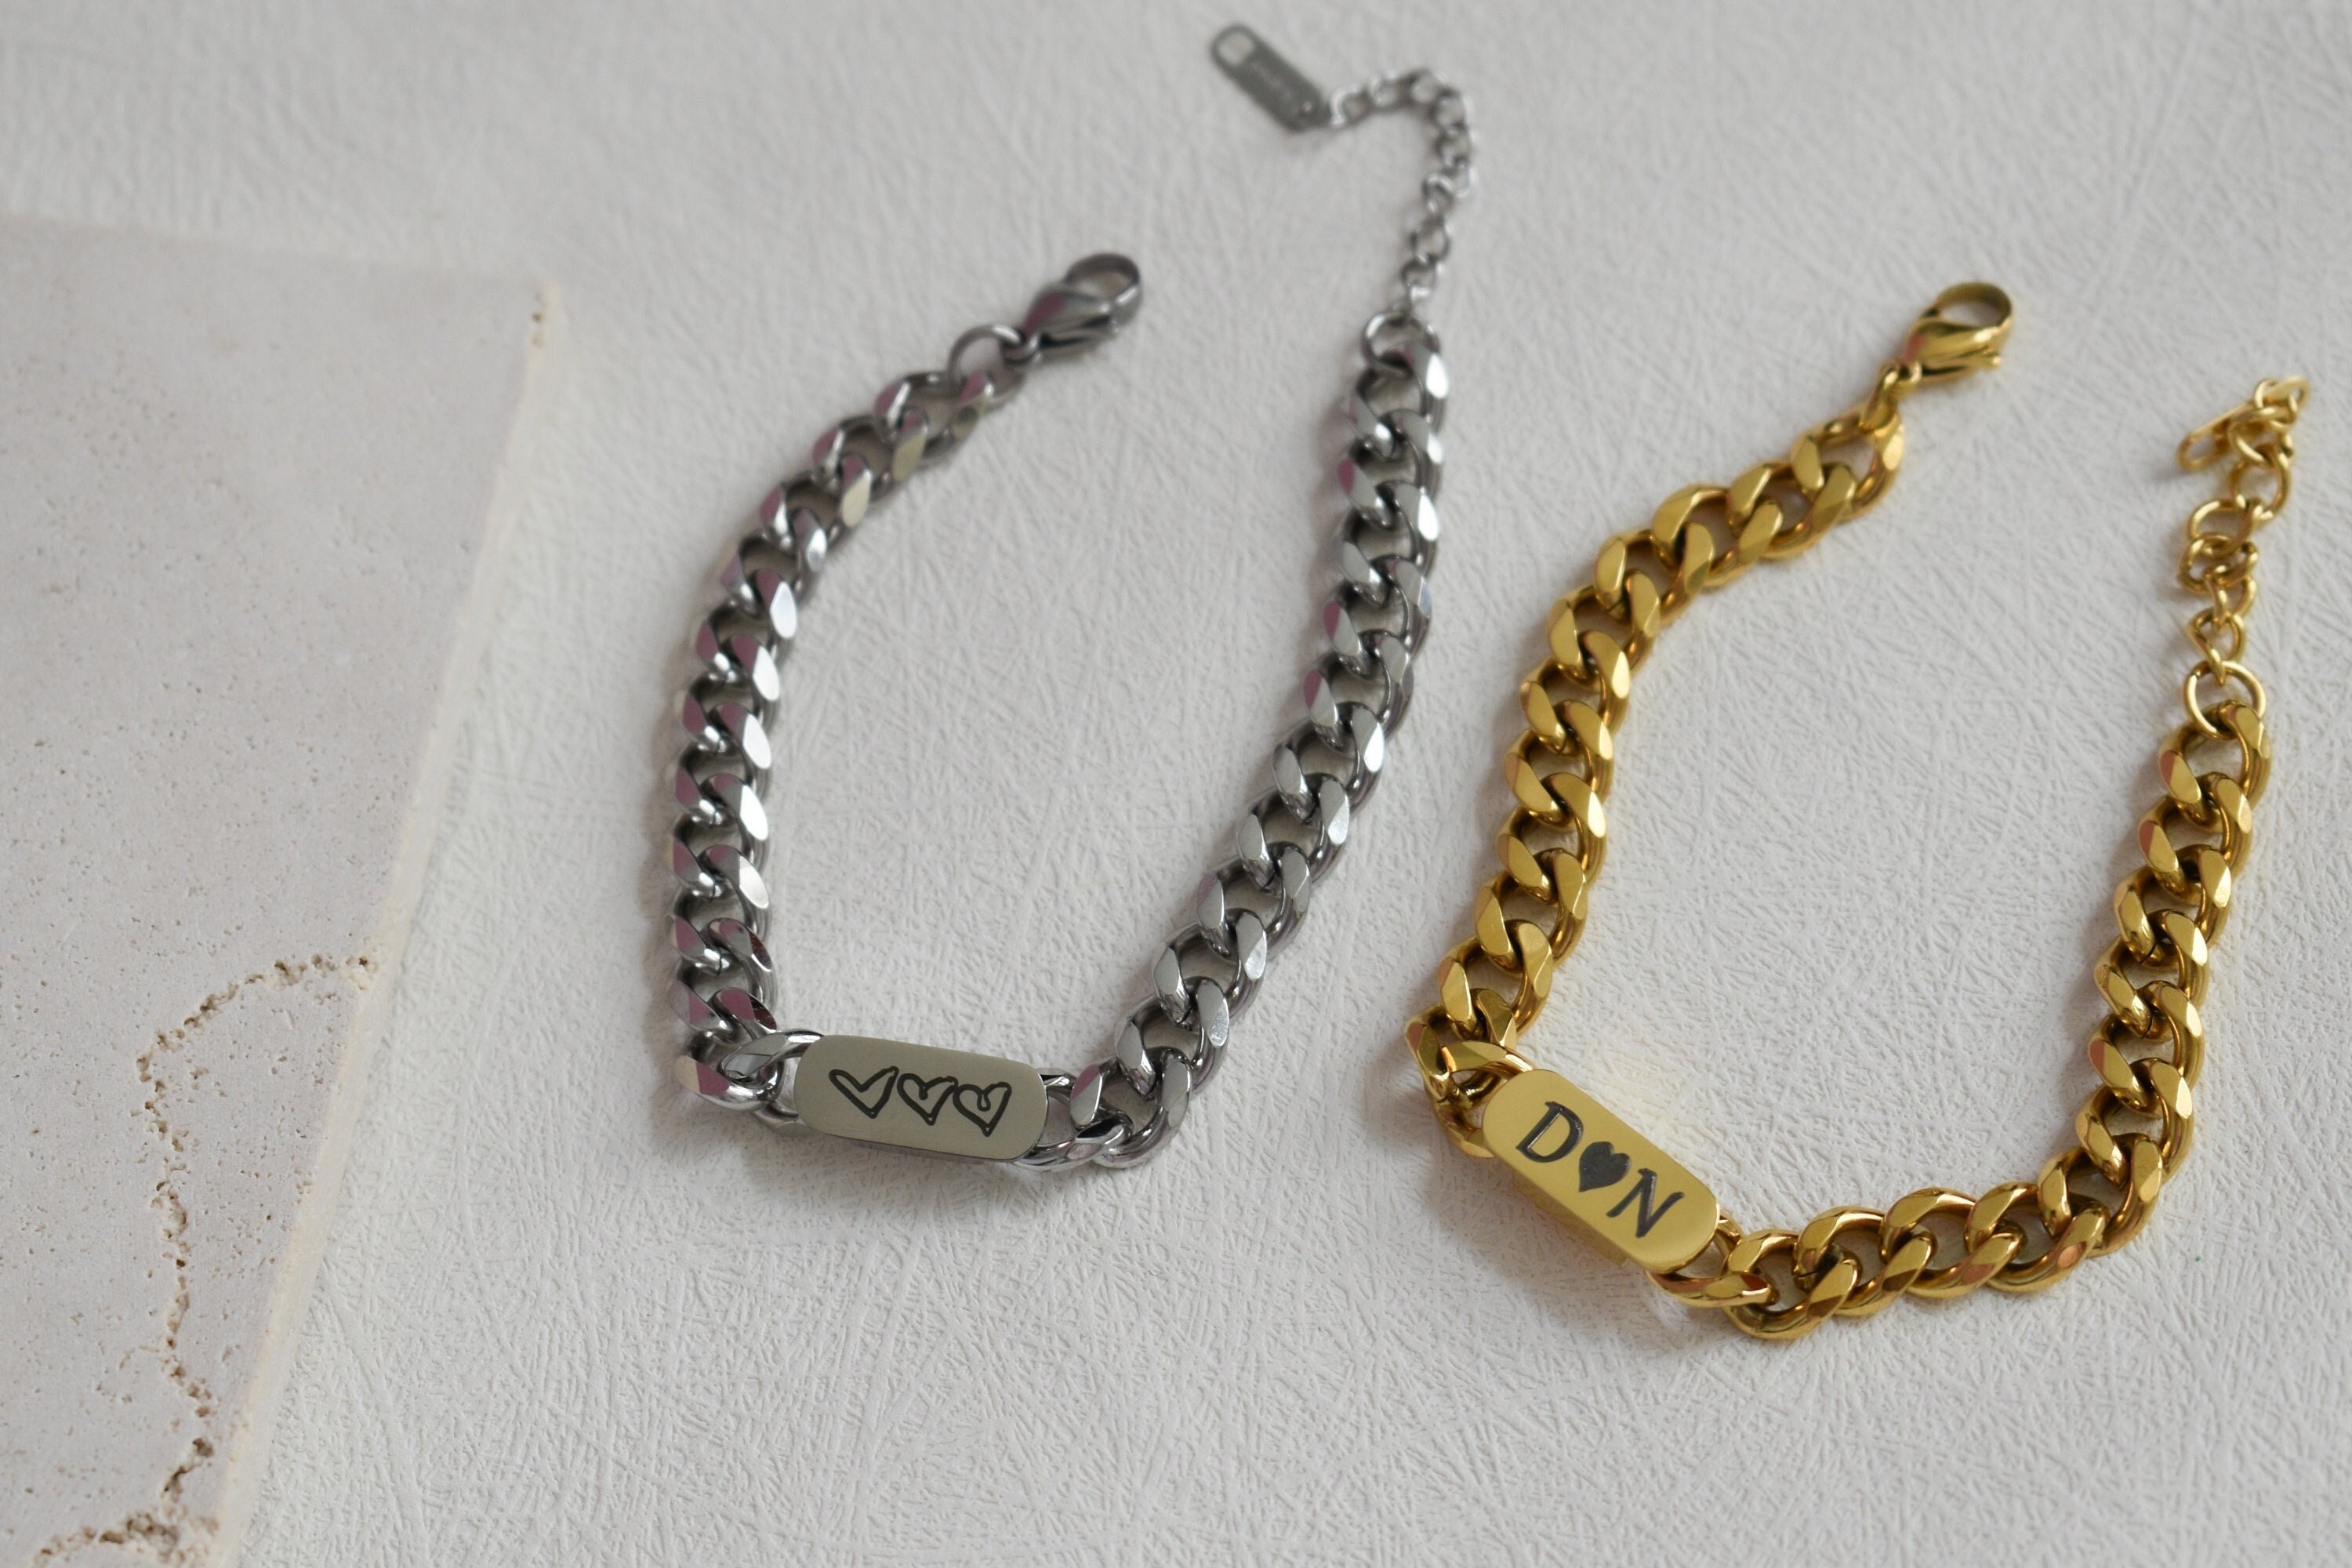 Engraved Traveler's Prayer on Leather Band, Gold and Silver Unisex Bracelet  - Psalms 91:11, Jewish Jewelry | Judaica Web Store